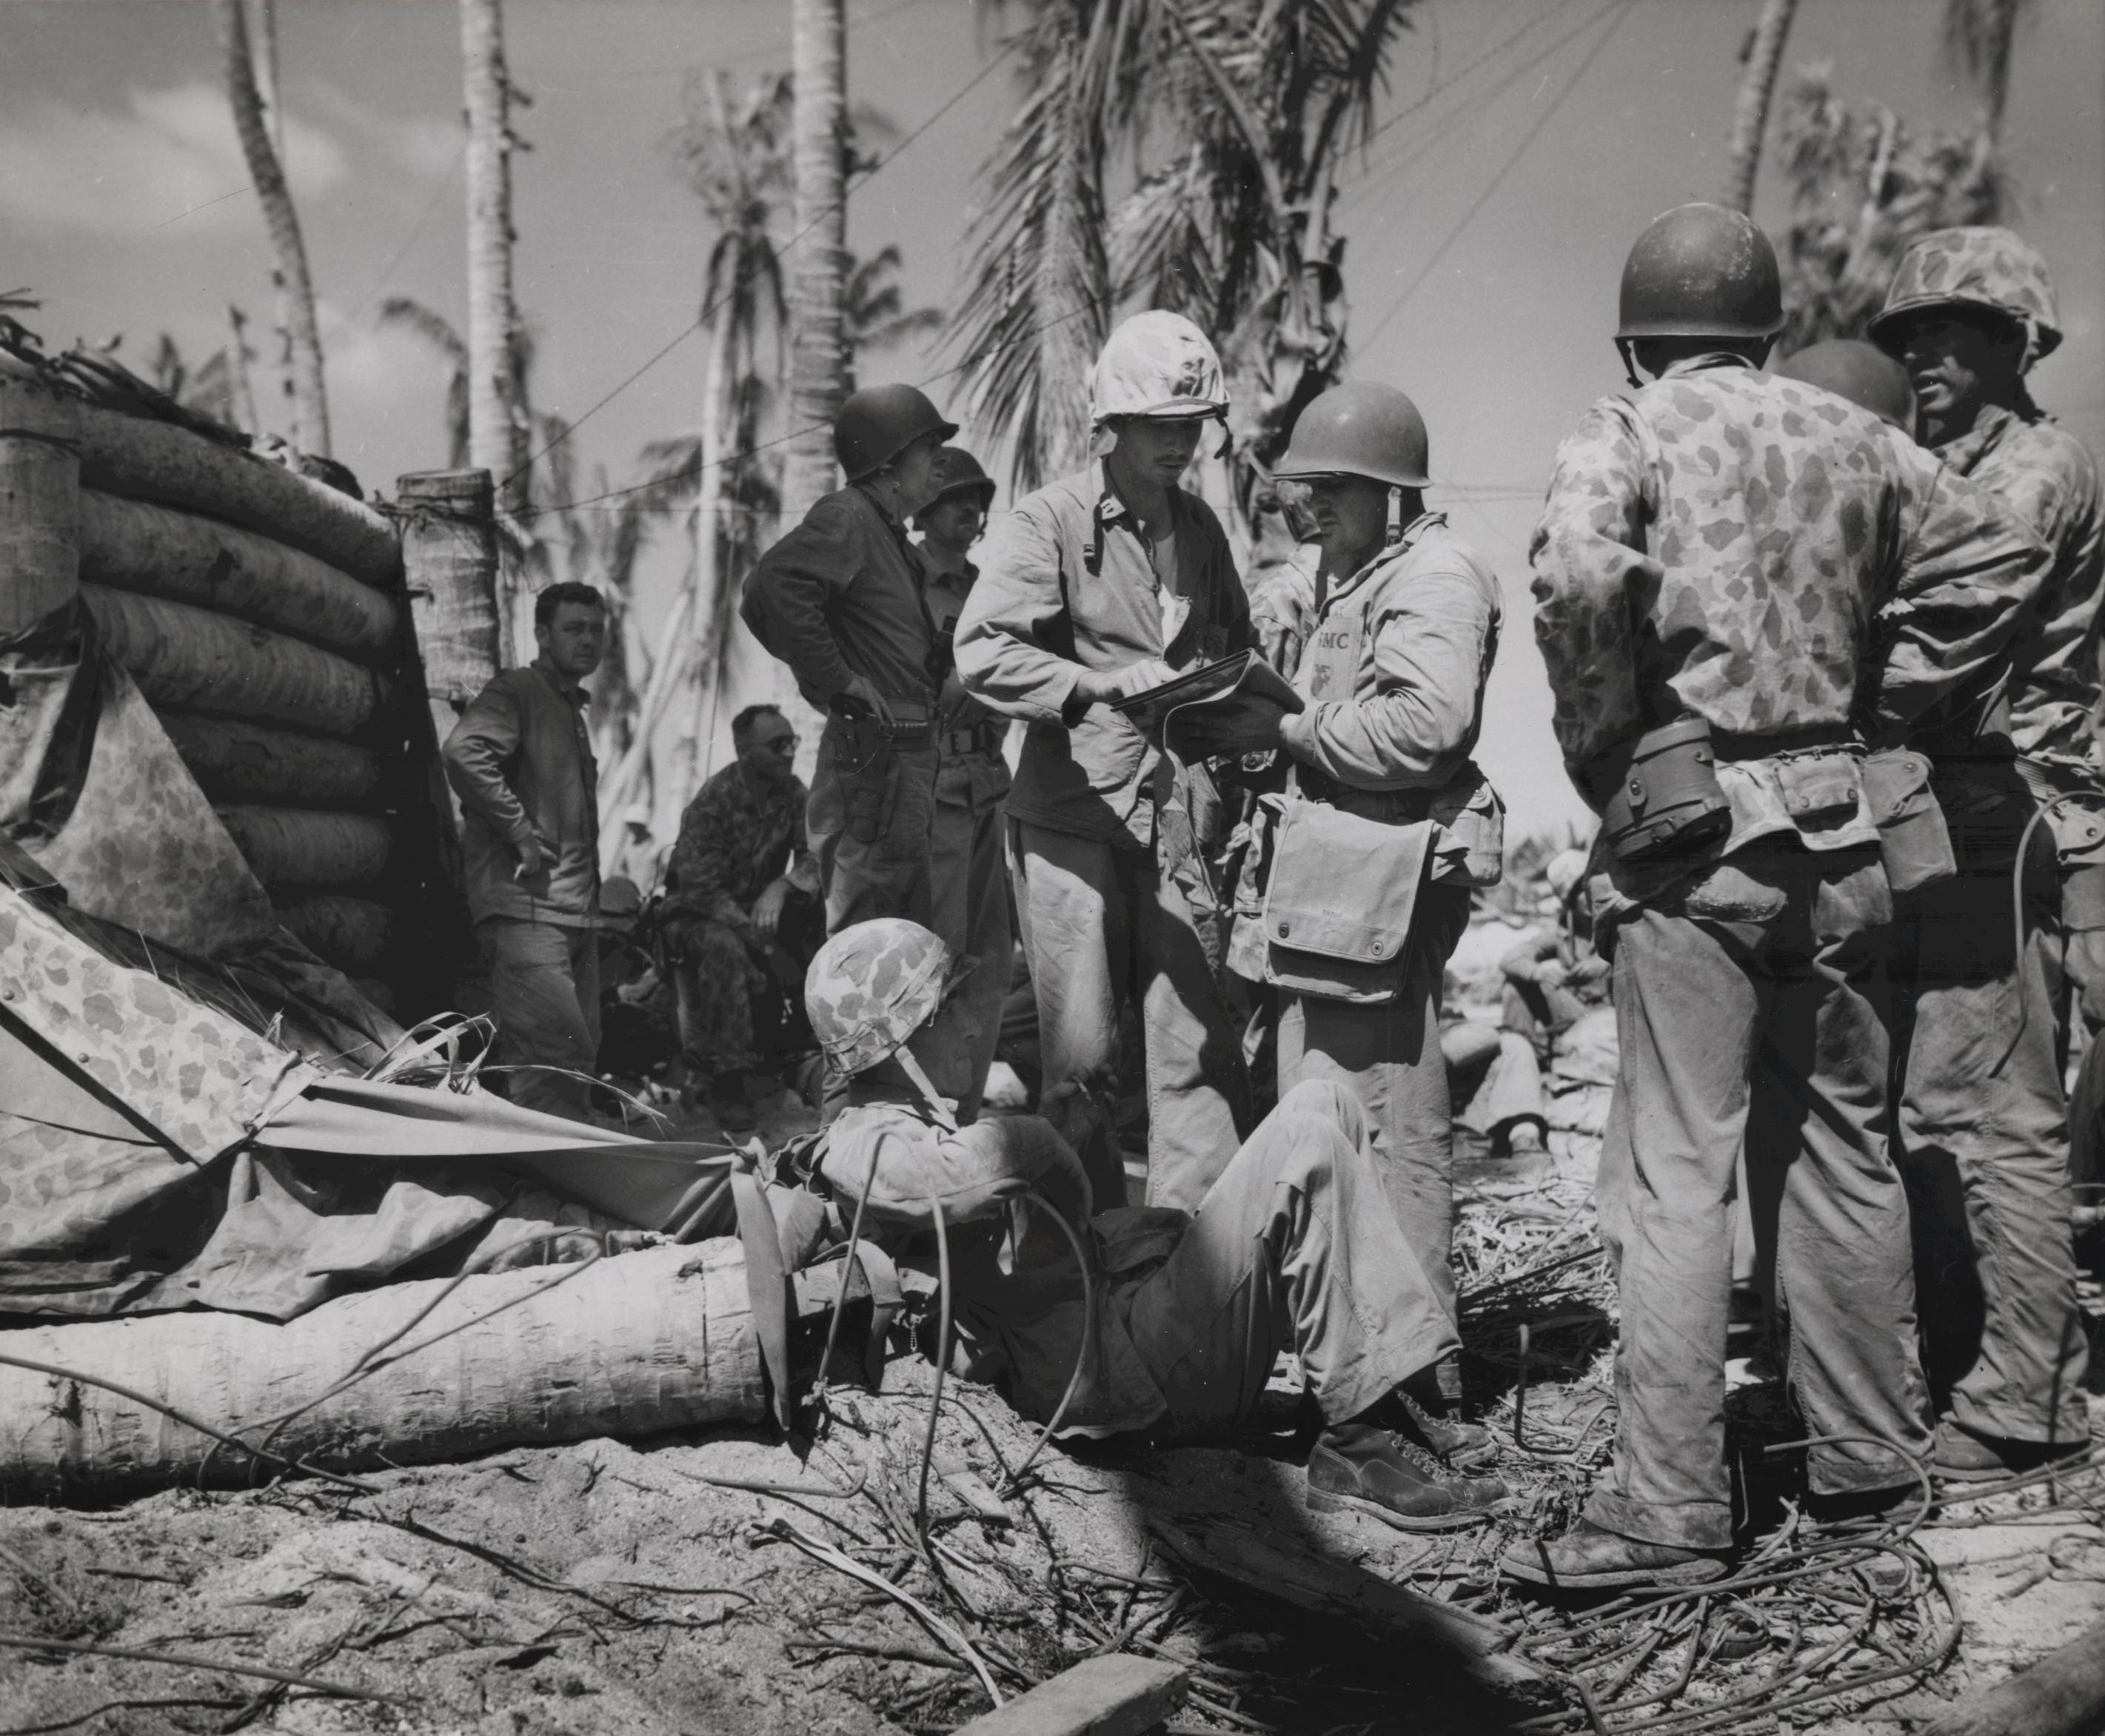 Colonel Merritt Edson and Colonel David Shoup met over Betio tactics, Tarawa Atoll, 23 Nov 1943